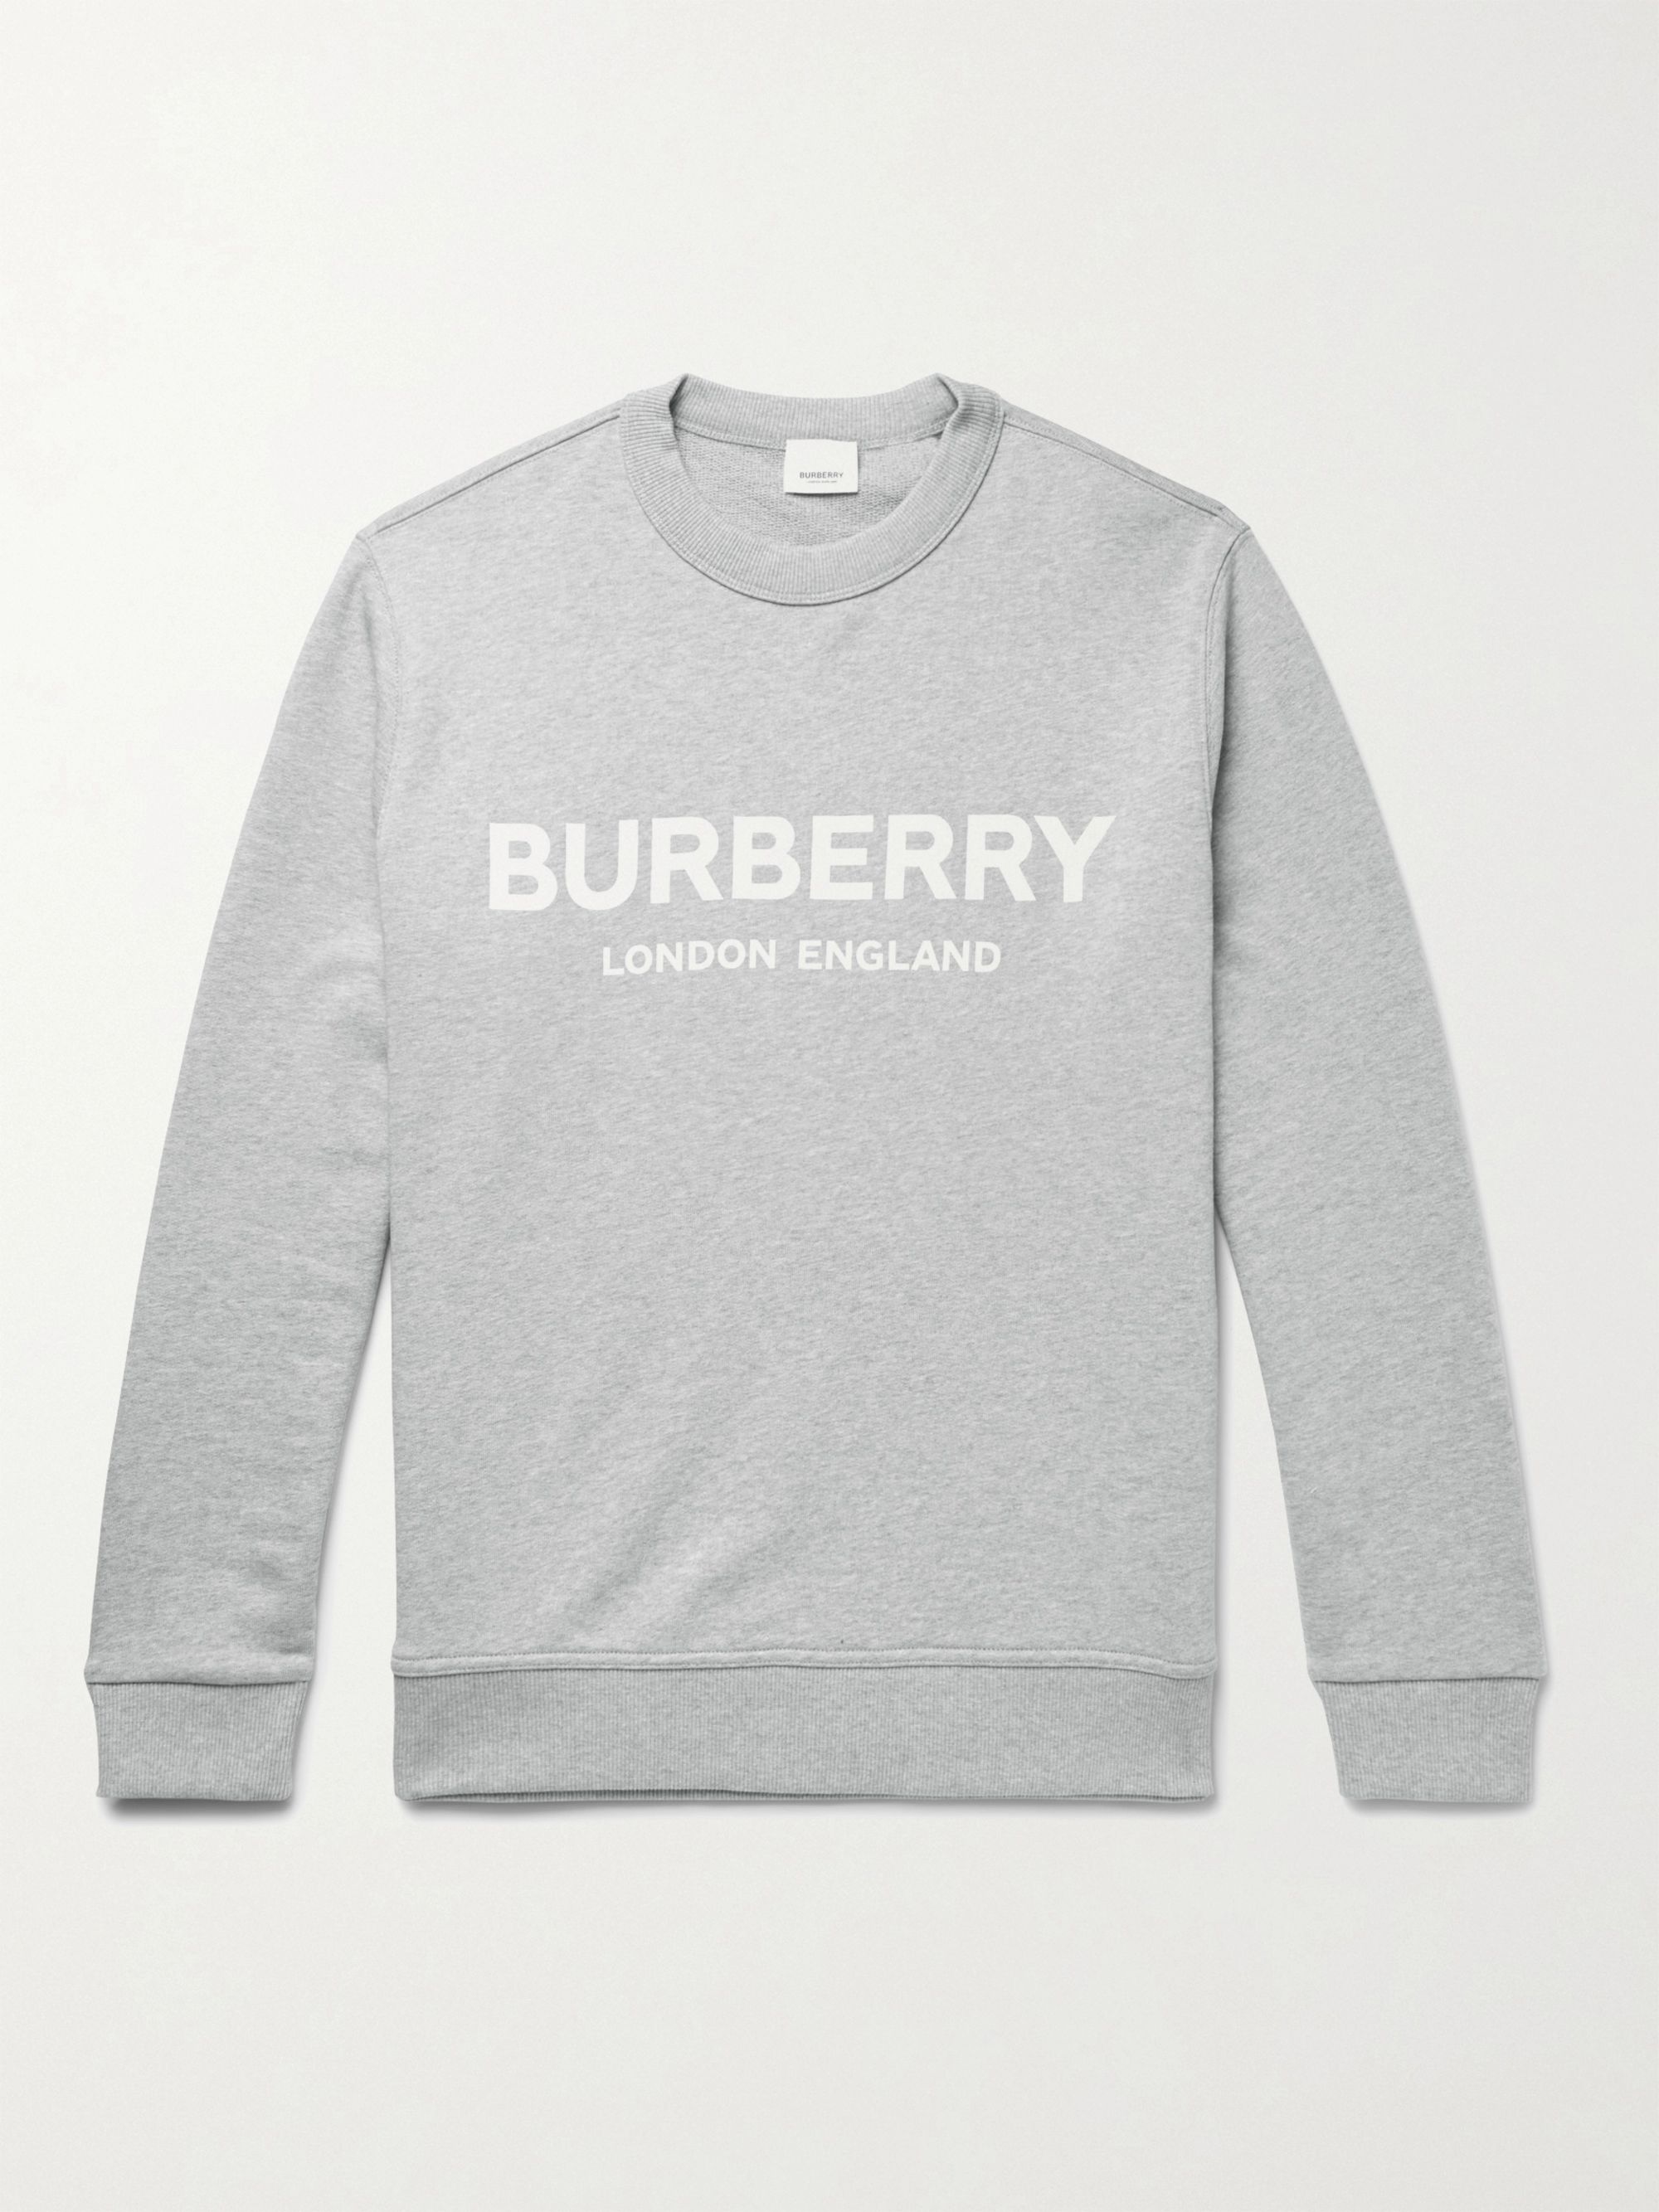 burberry sweater white